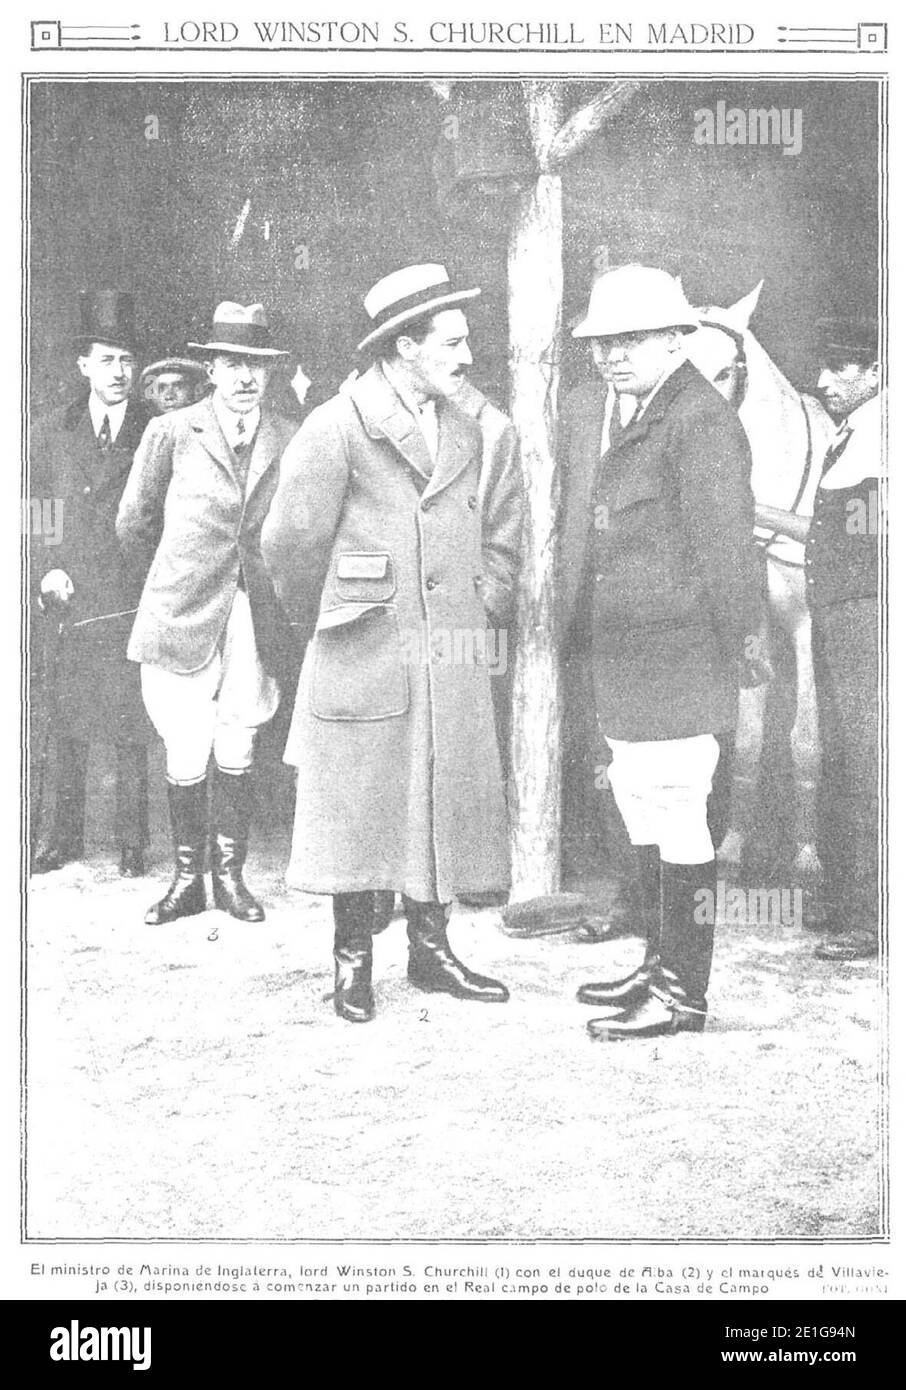 Lord Winston S. Churchill en Madrid, de Goñi, Nuevo Mundo, 16 de abril de 1914 . Stock Photo